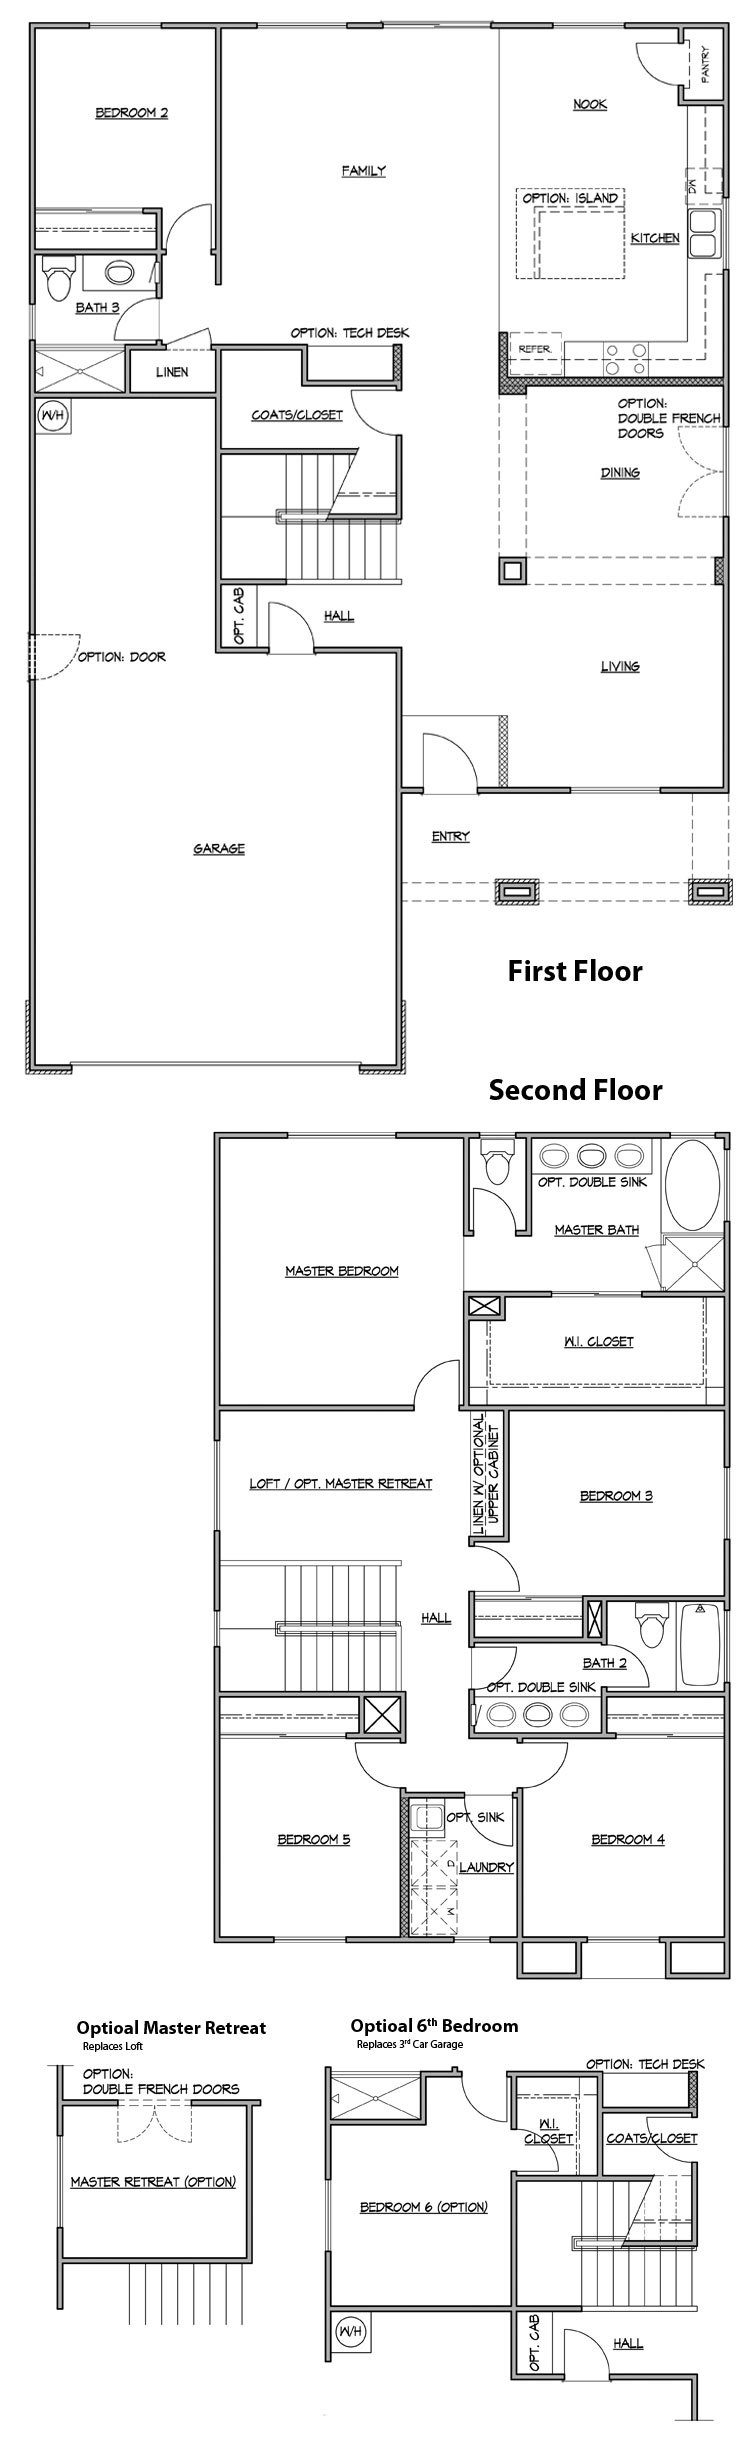 VDV - Residence 5 Floorplan